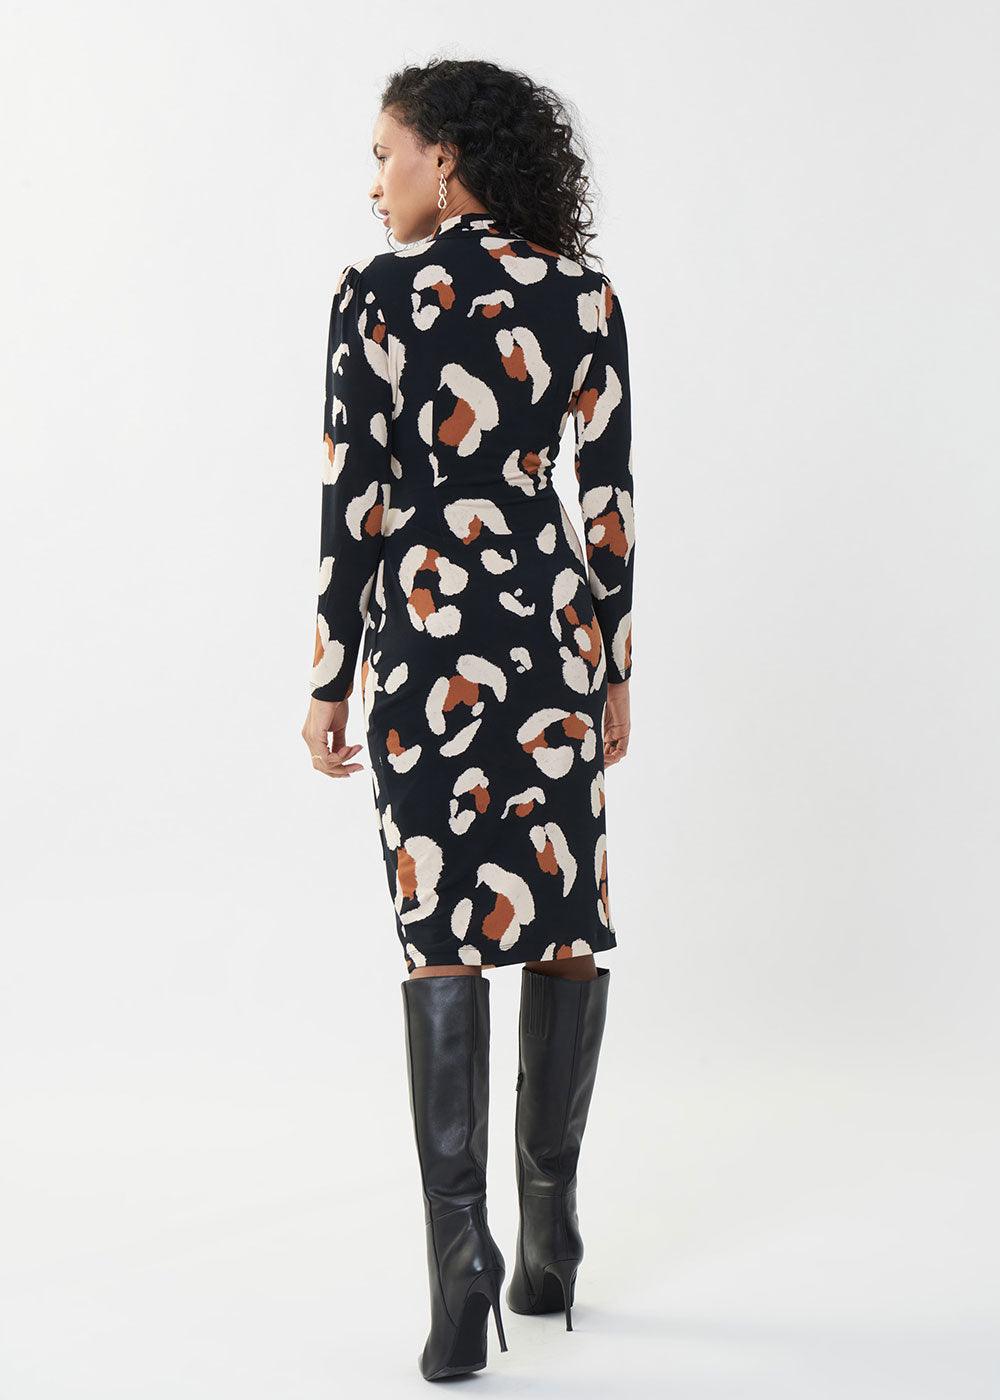 Joseph Ribkoff Animal Print Dress - Justina Clothing